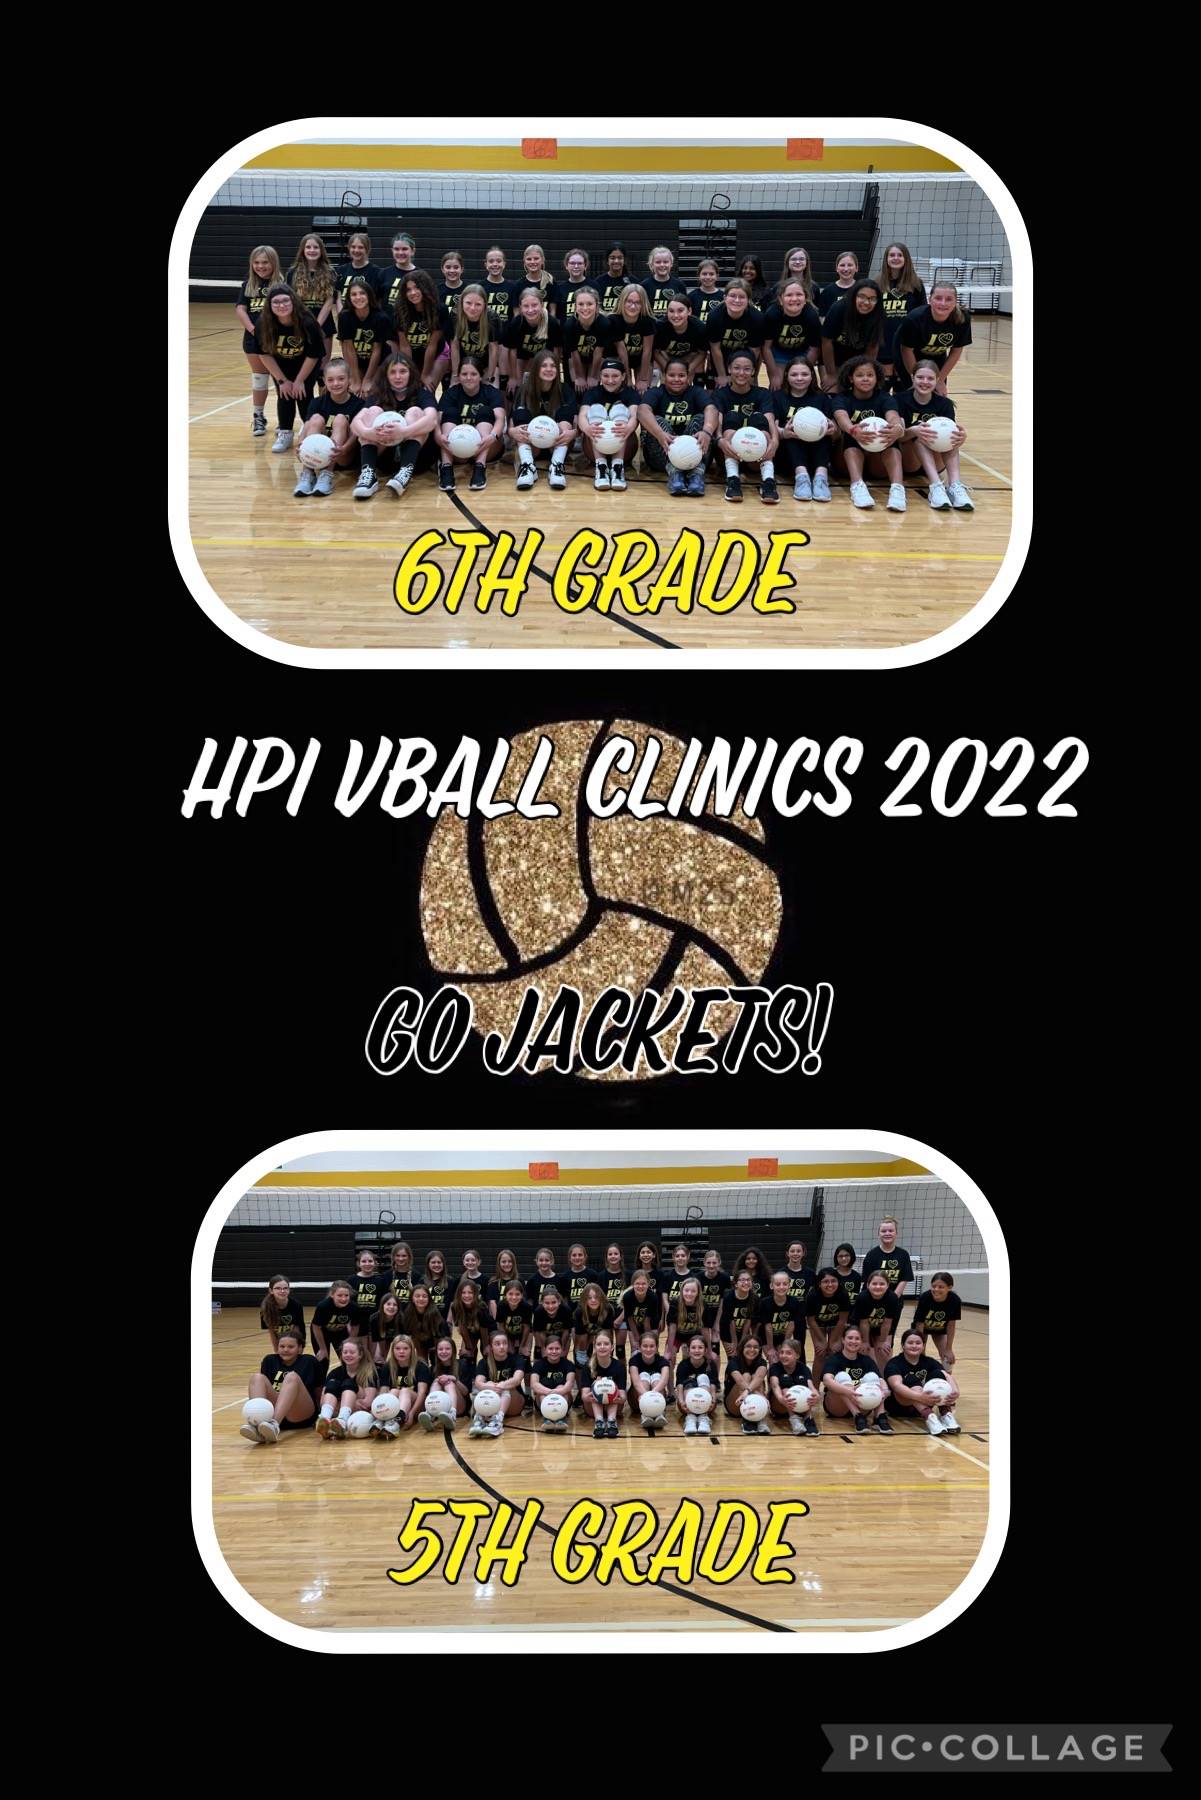 HPI Volleyball CLinics 2022